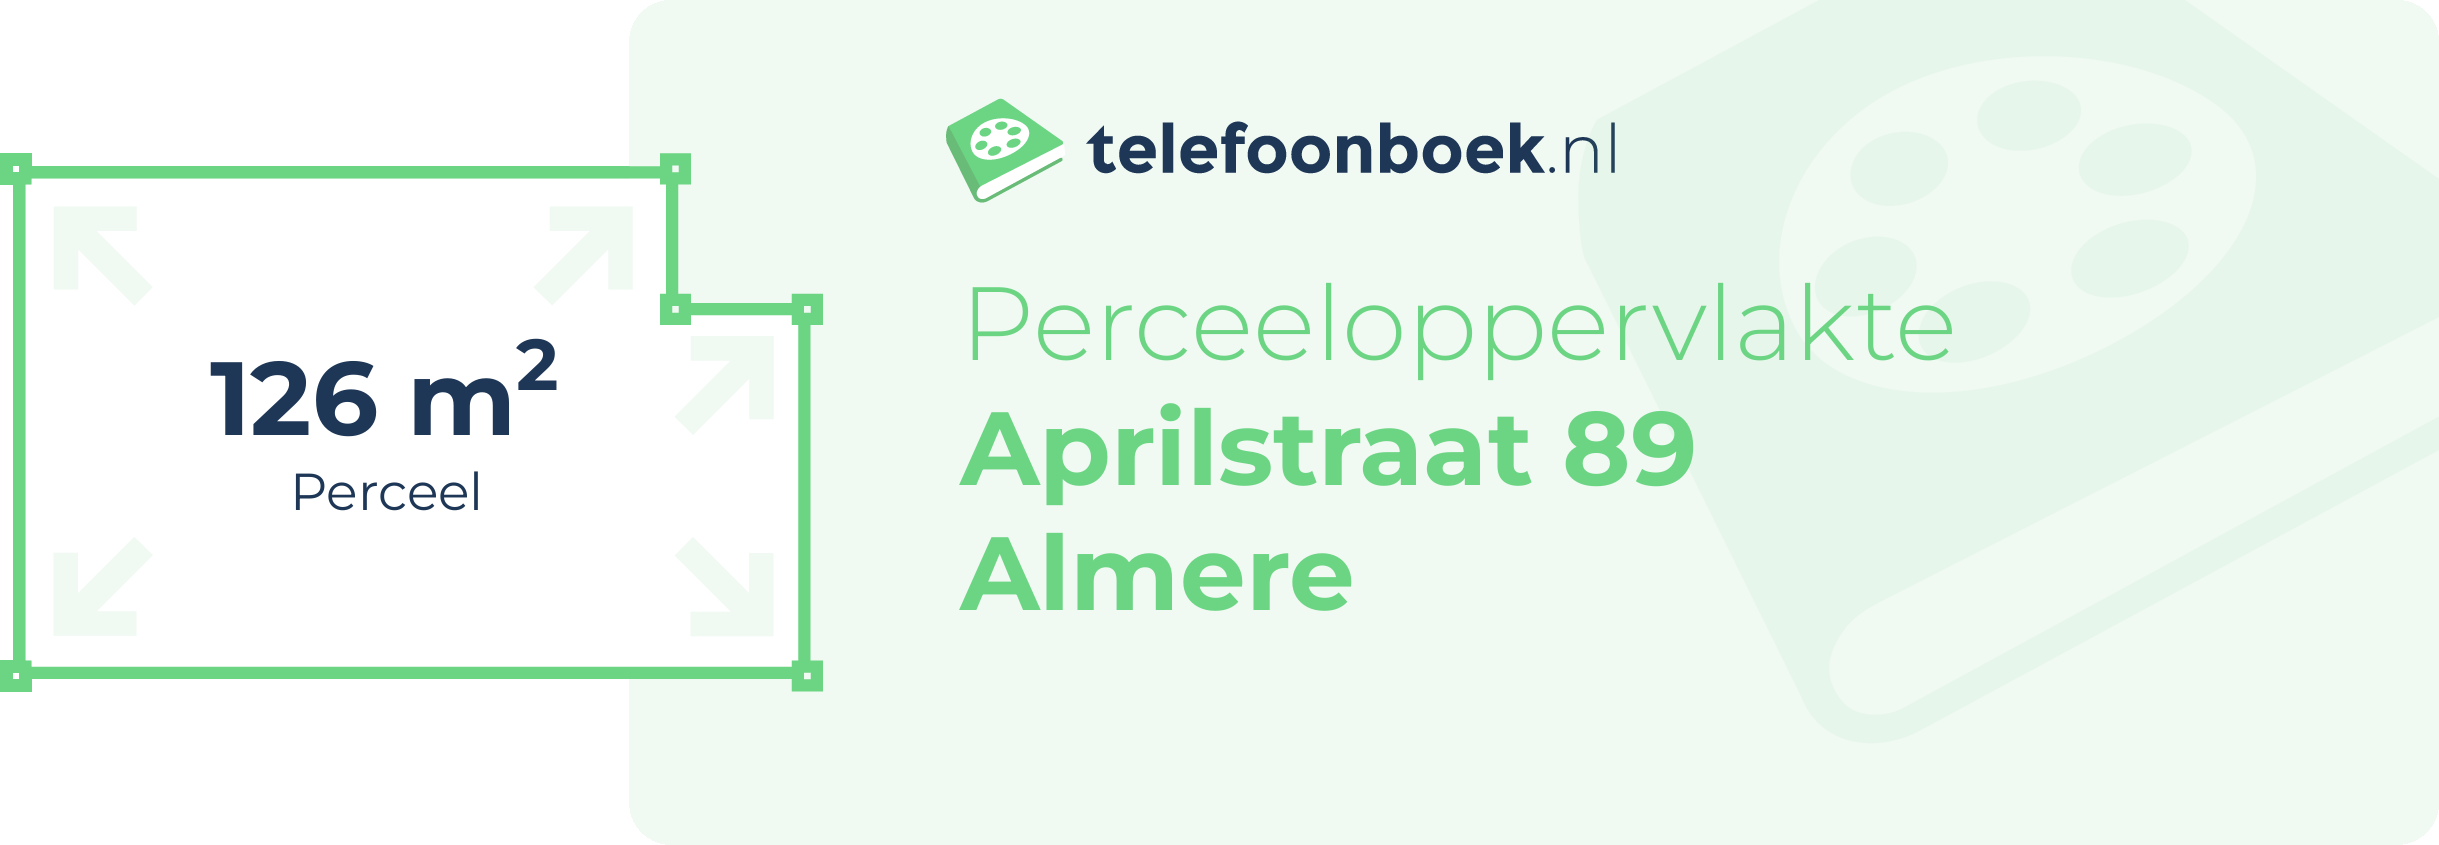 Perceeloppervlakte Aprilstraat 89 Almere